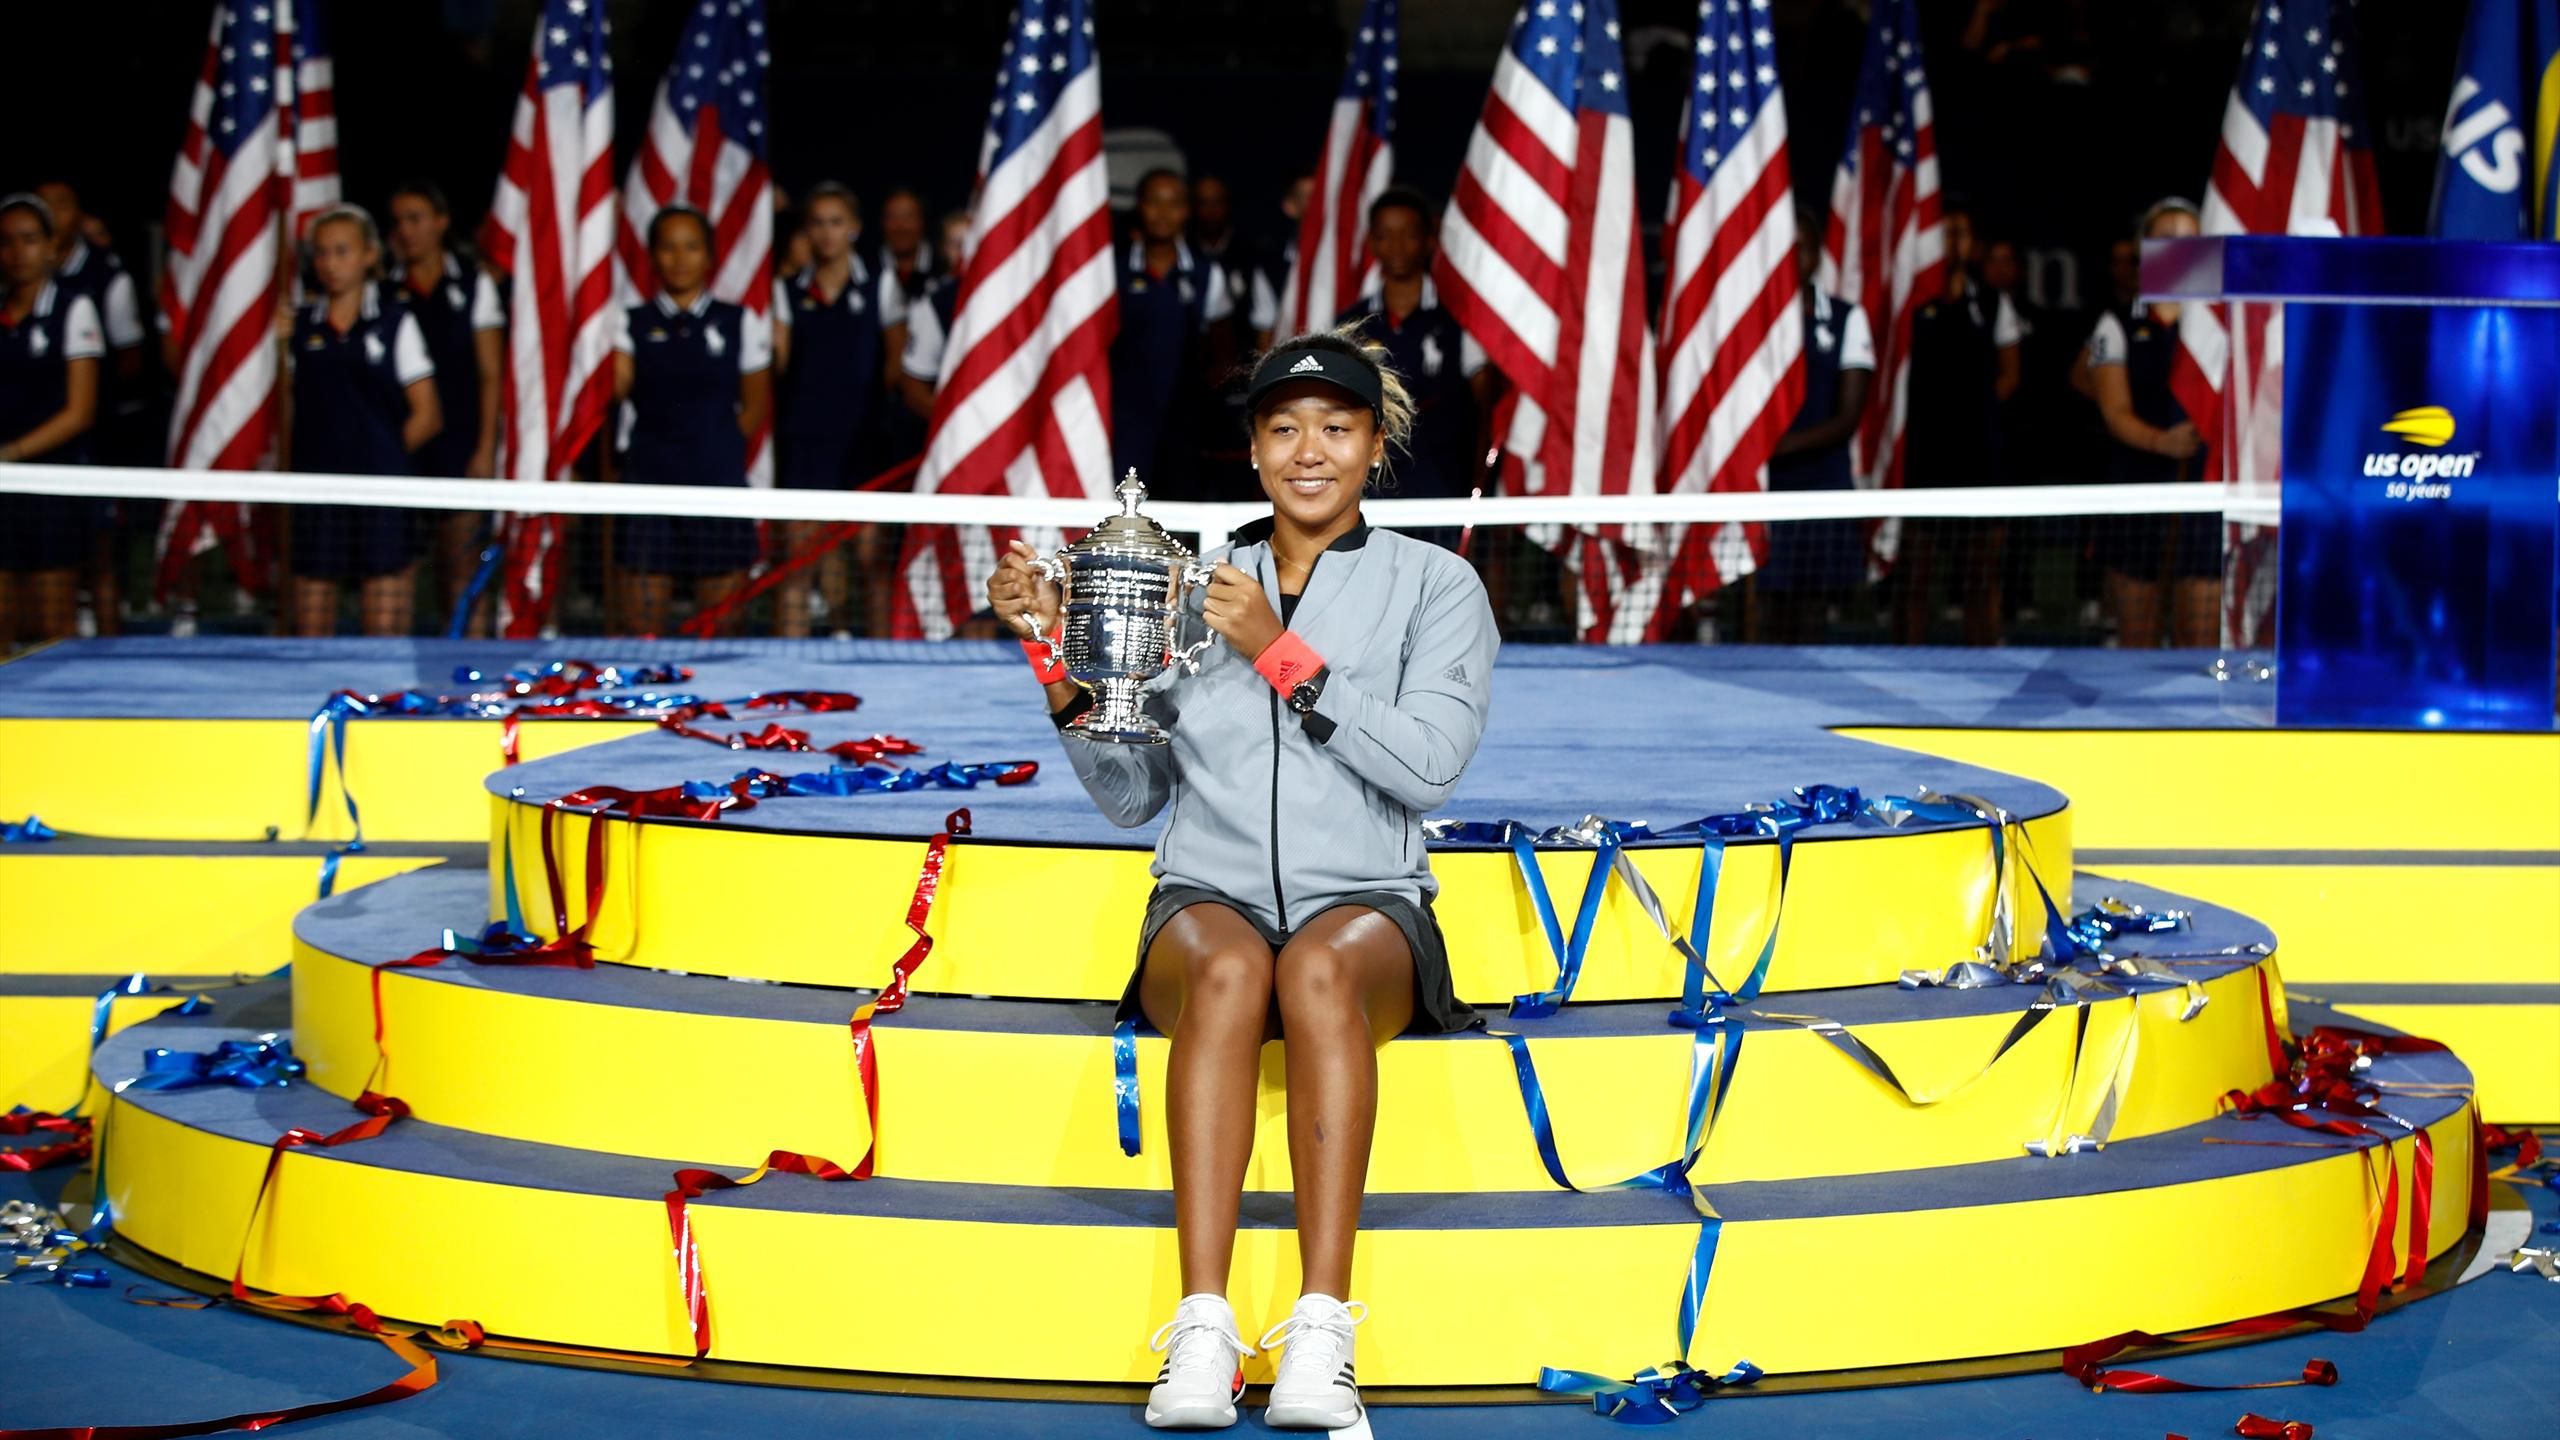 U.S. Open Champion Naomi Osaka Wears Comme des Garçons